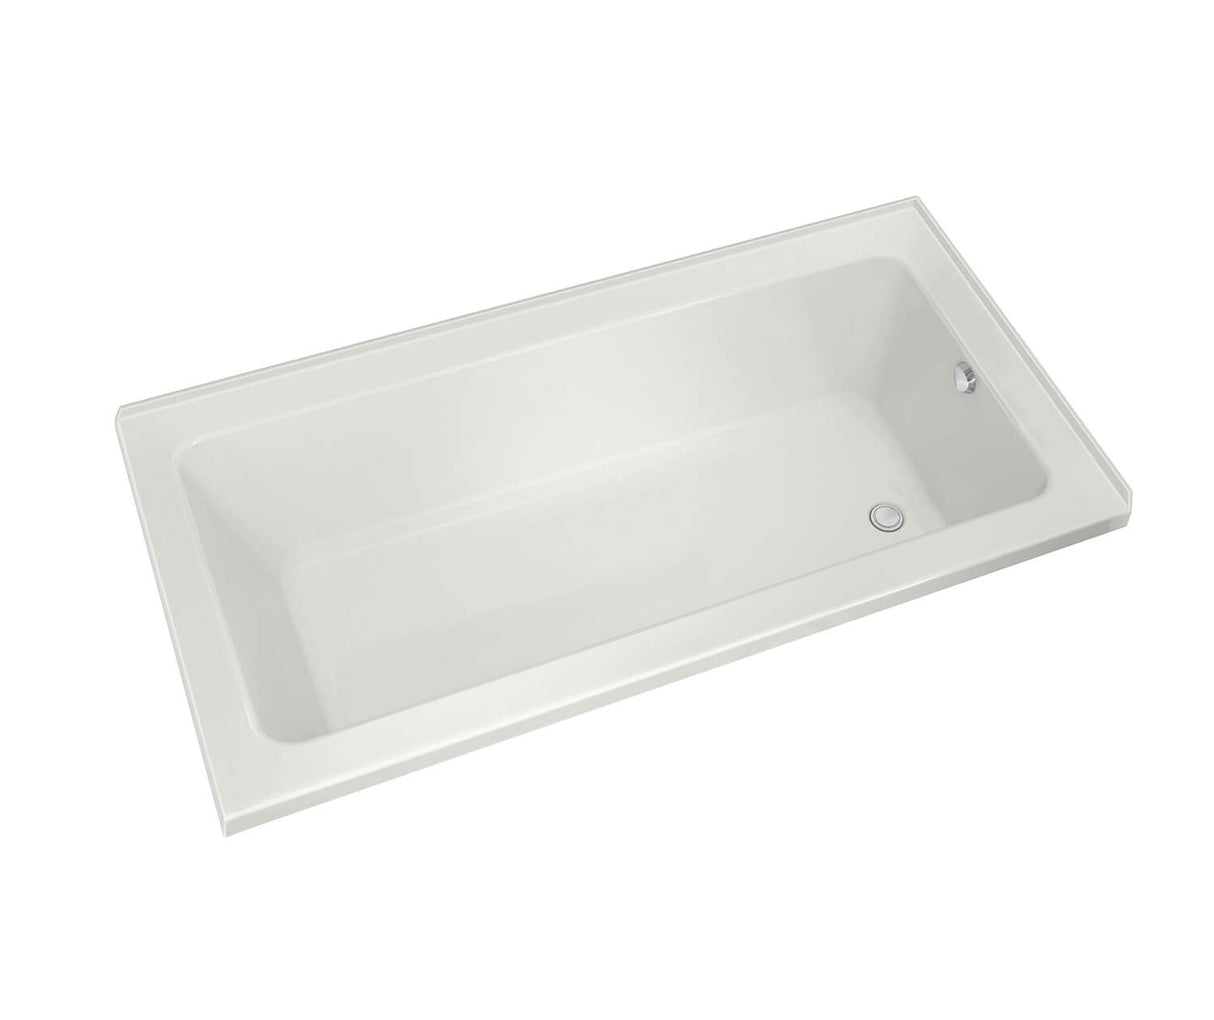 MAAX 106200-L-103-001 Pose 6030 IF Acrylic Corner Right Left-Hand Drain Aeroeffect Bathtub in White